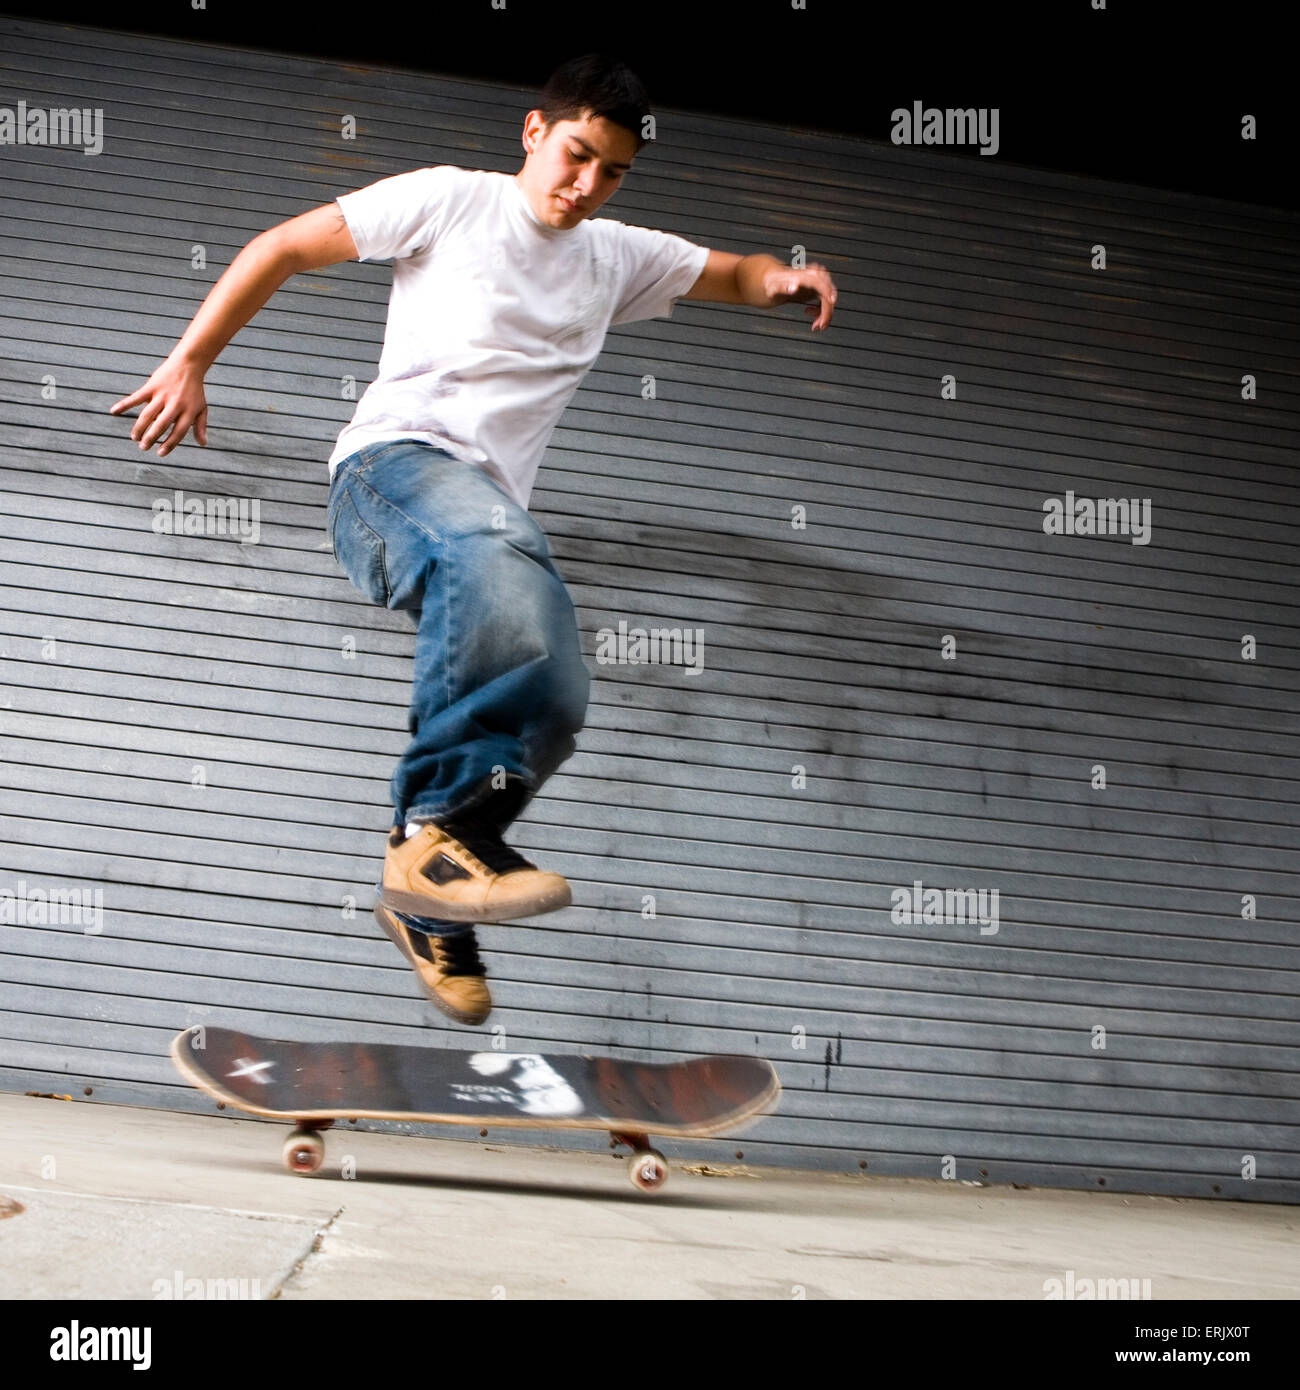 Skateboarder doing a street trick in an urban enviroment. Stock Photo